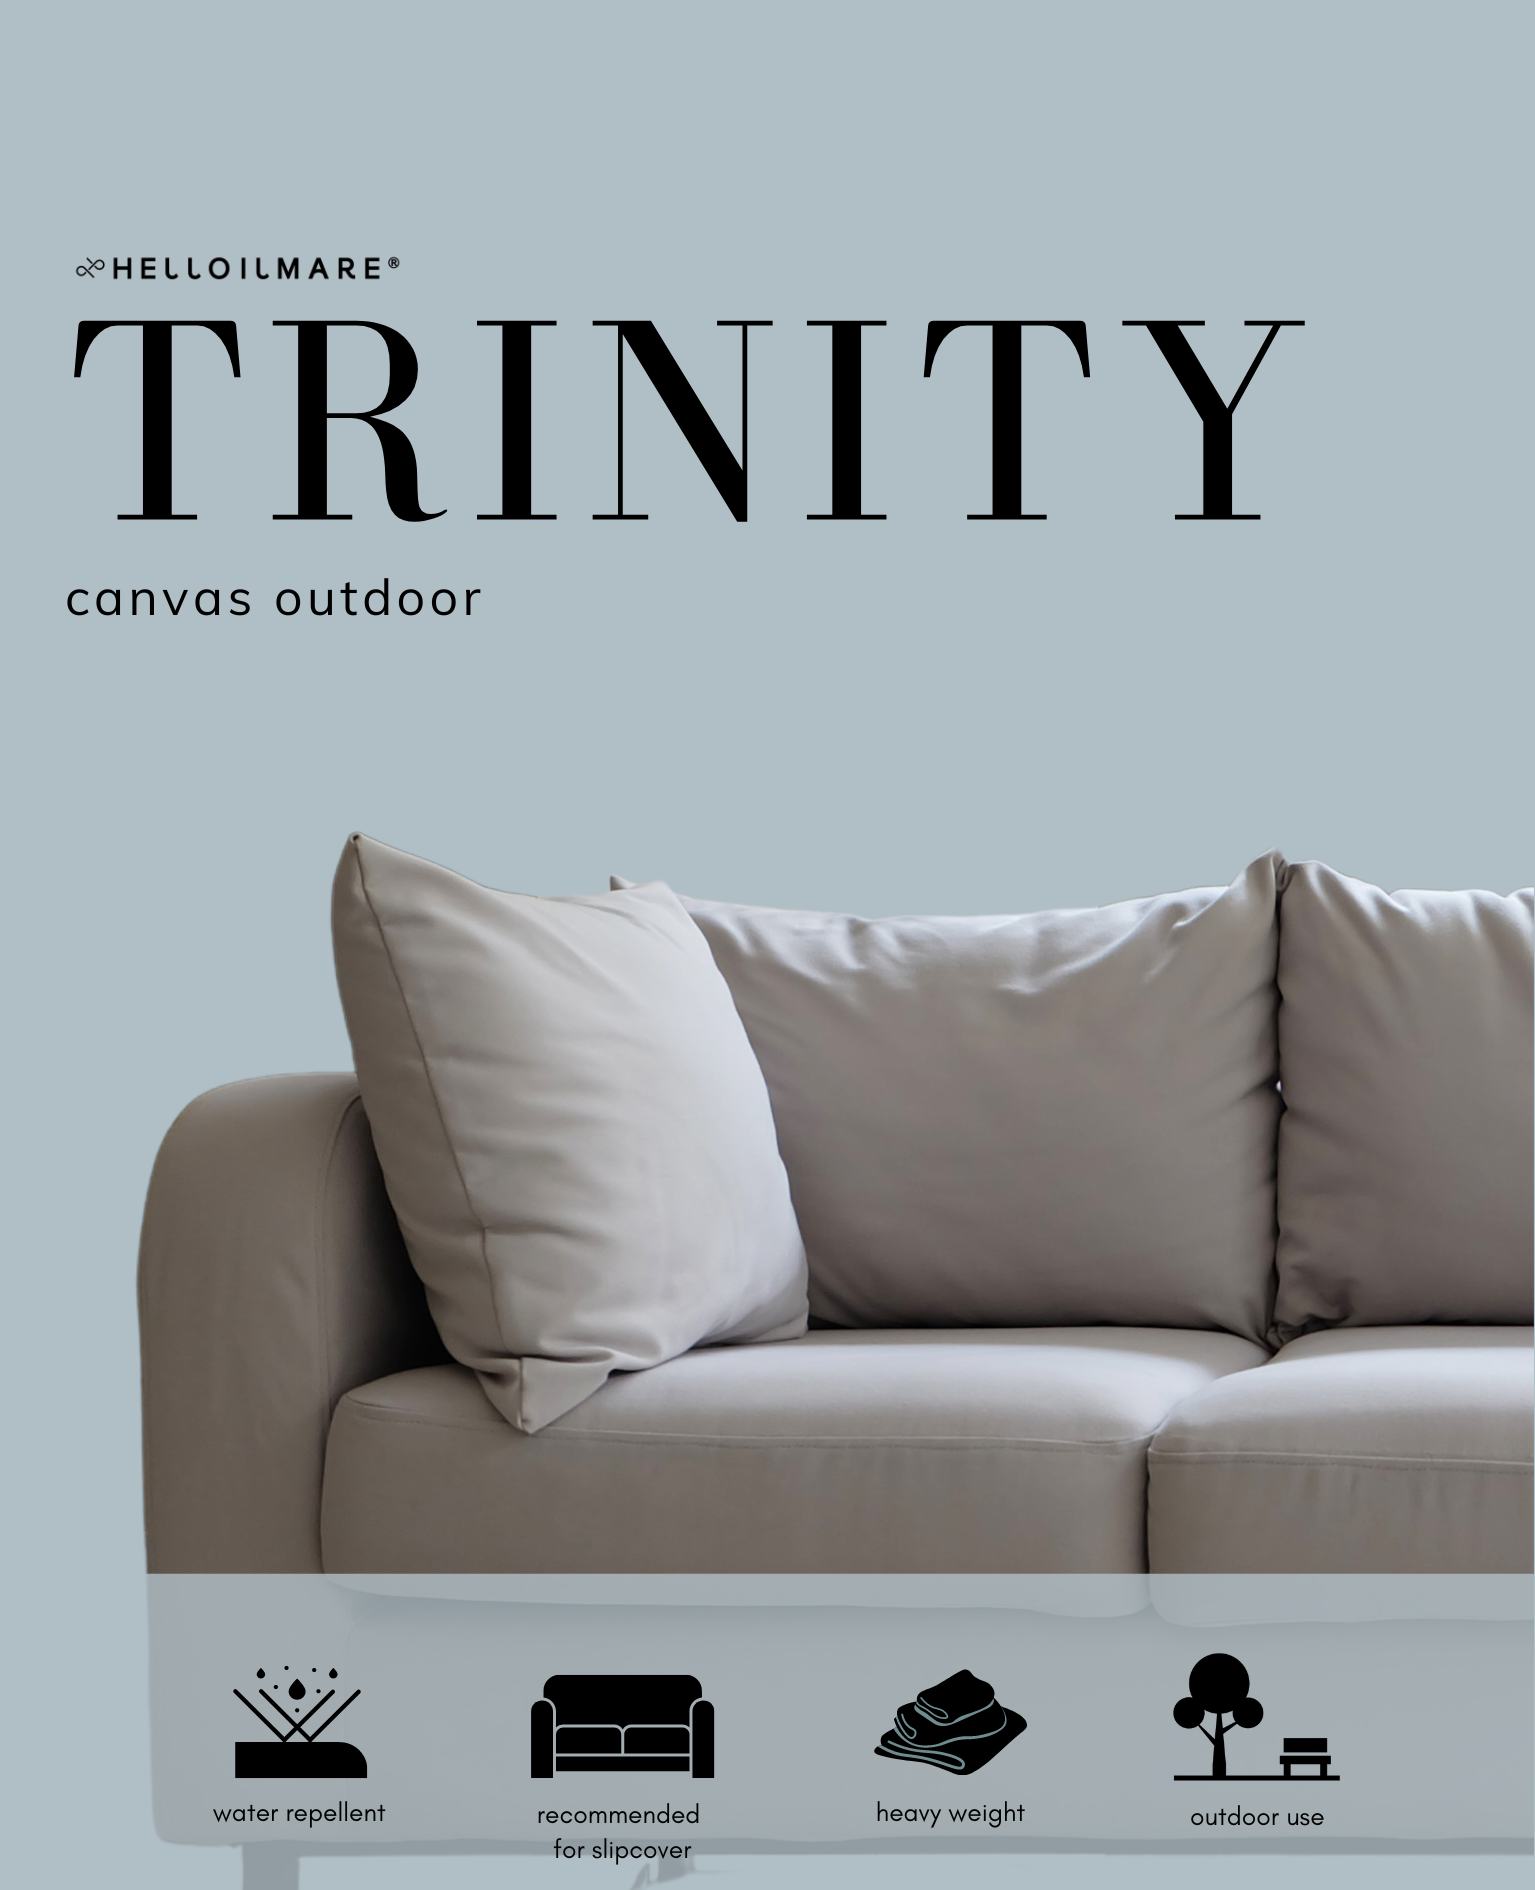 2 Seater Trinity - Helloilmare